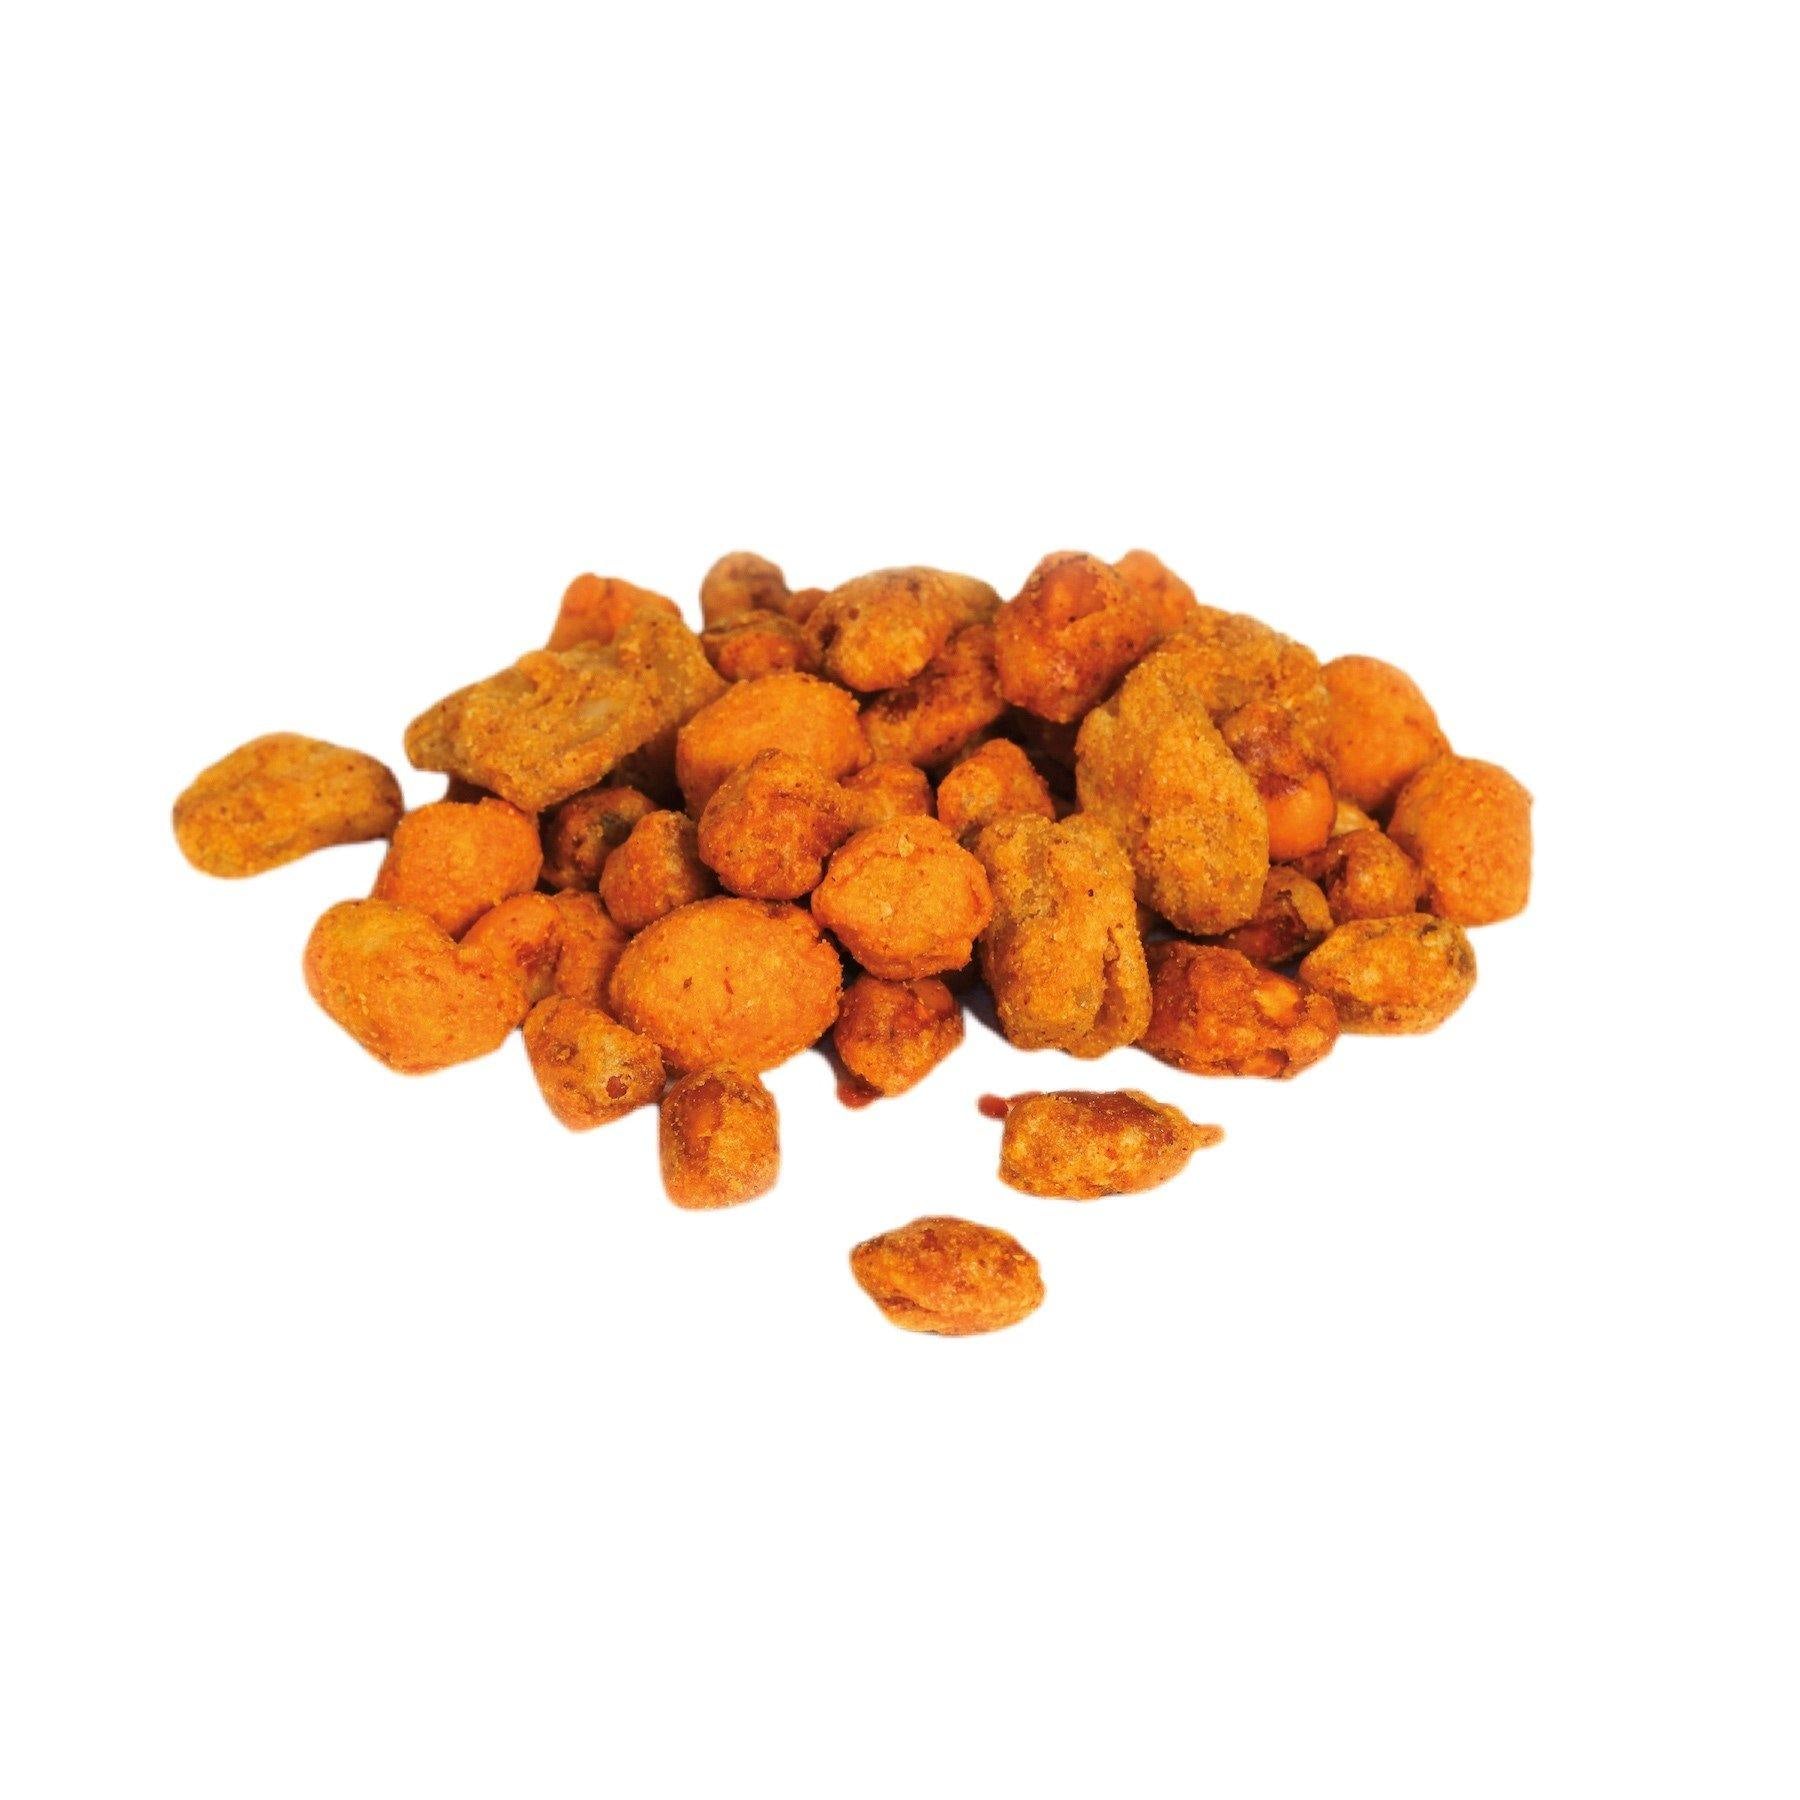 Spiced Nuts & Satay Broadbeans.